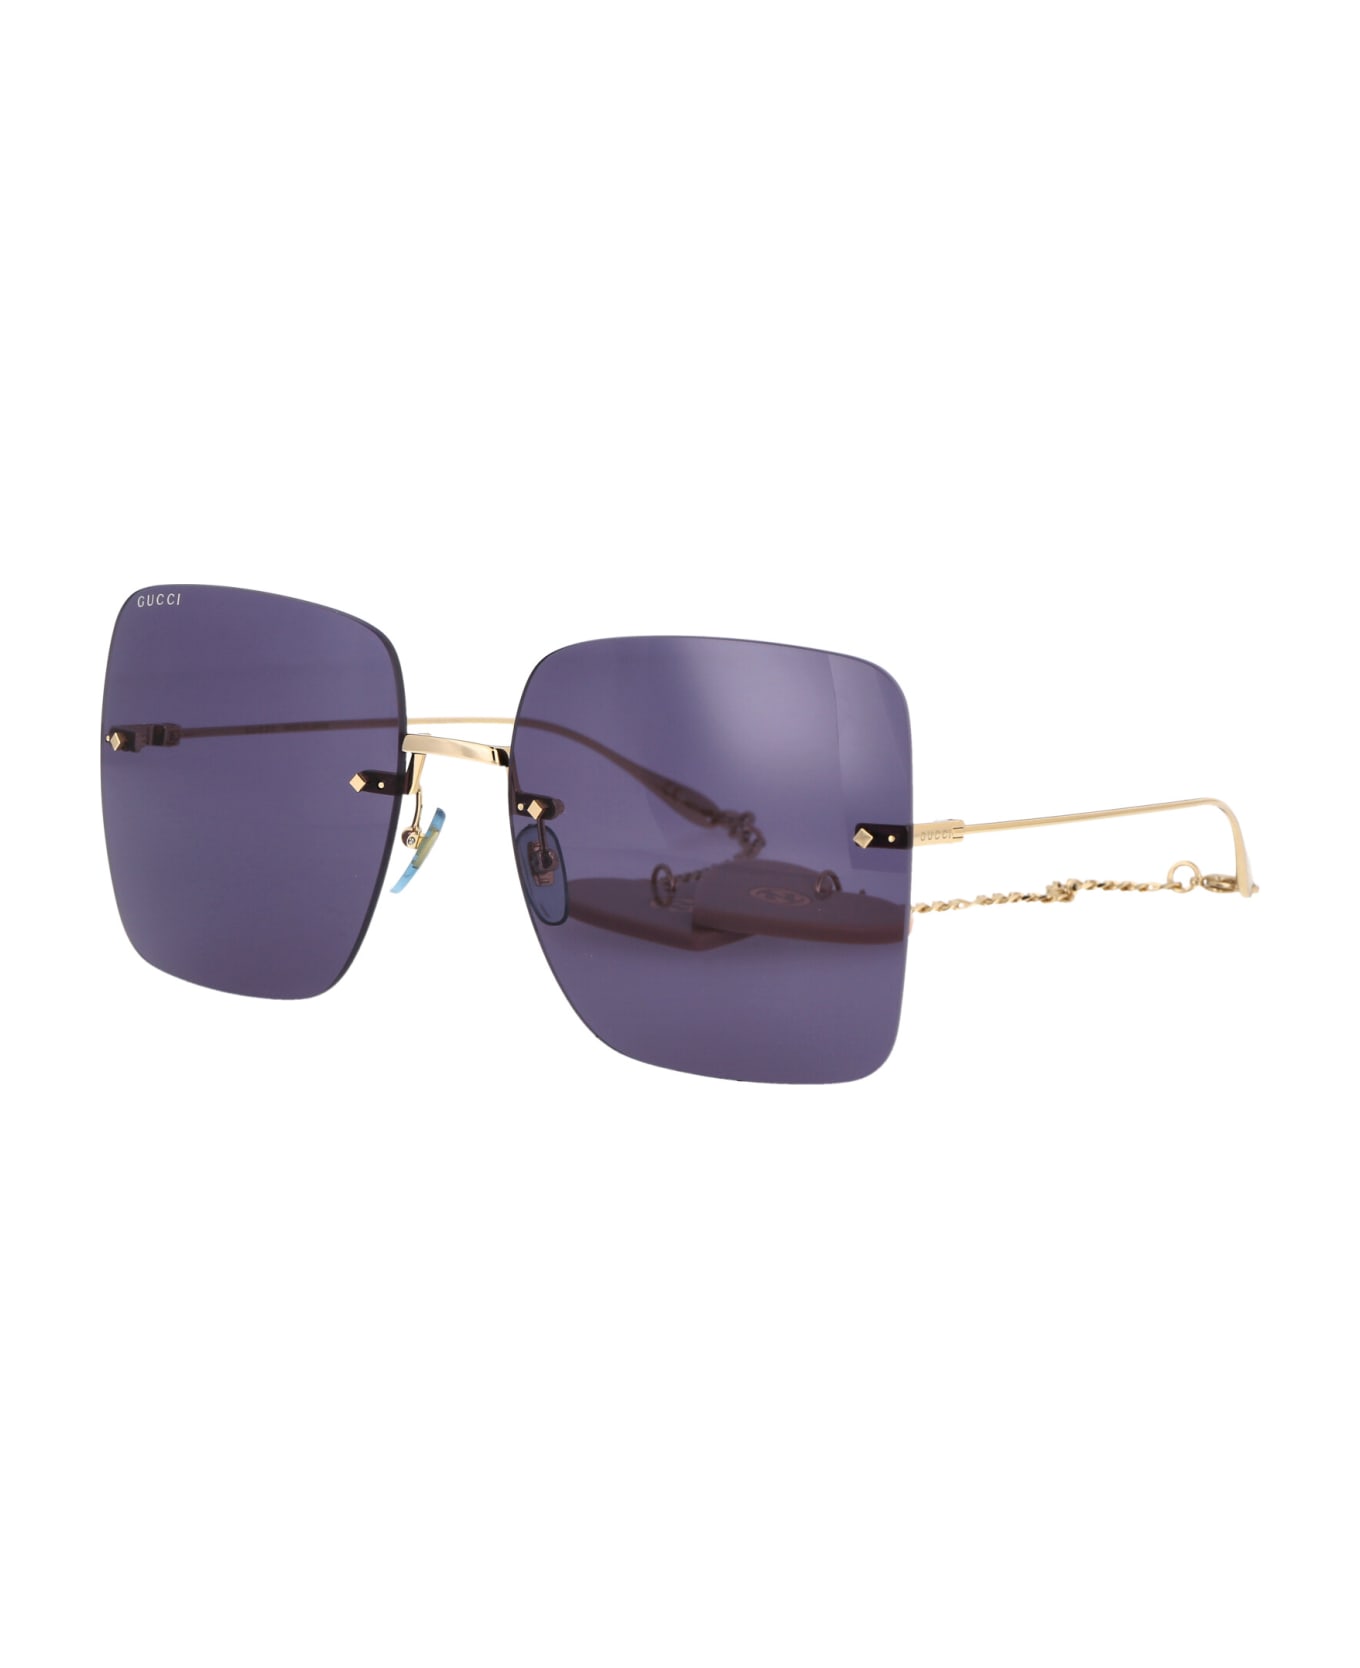 Gucci Eyewear Gg1147s Sunglasses - 004 GOLD GOLD BLUE サングラス